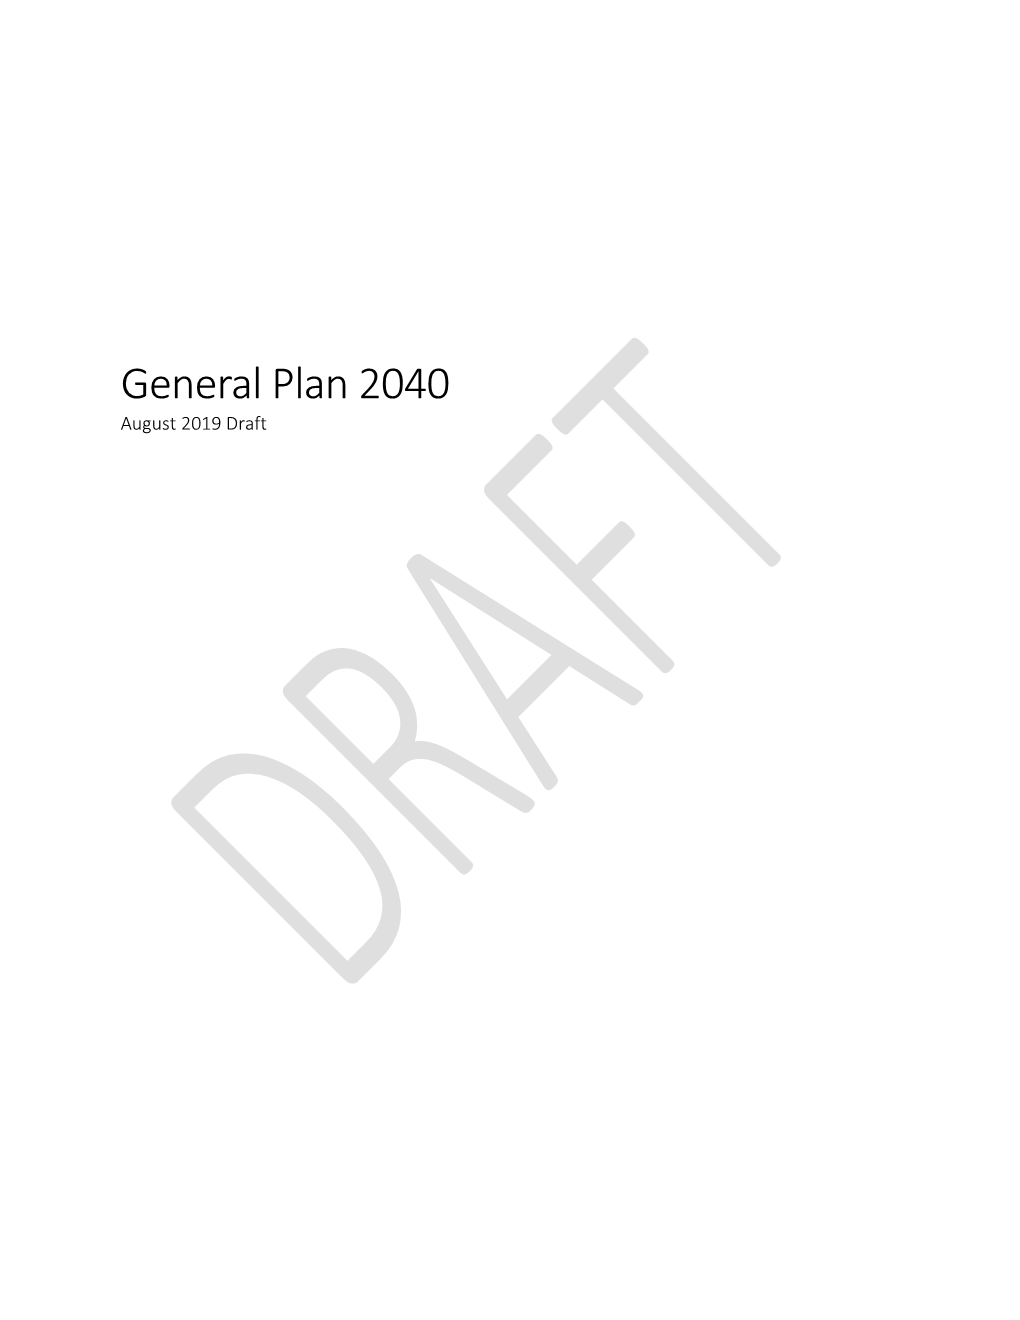 General Plan 2040 August 2019 Draft